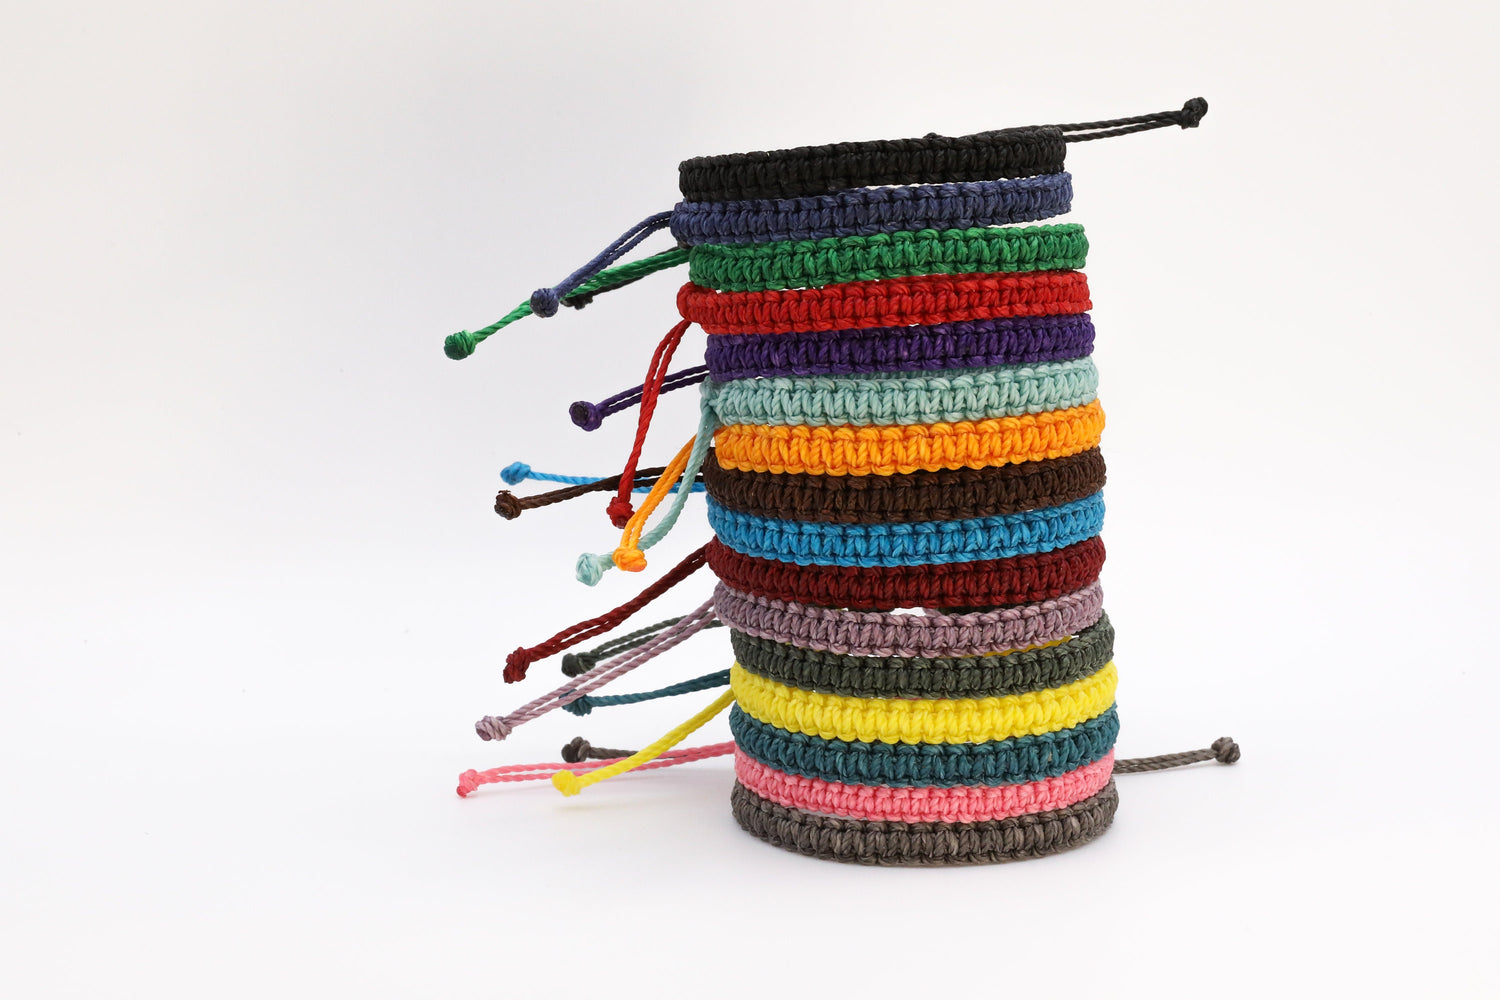 Purple Braided Macrame Bracelets: Bulk Orders & Wholesale